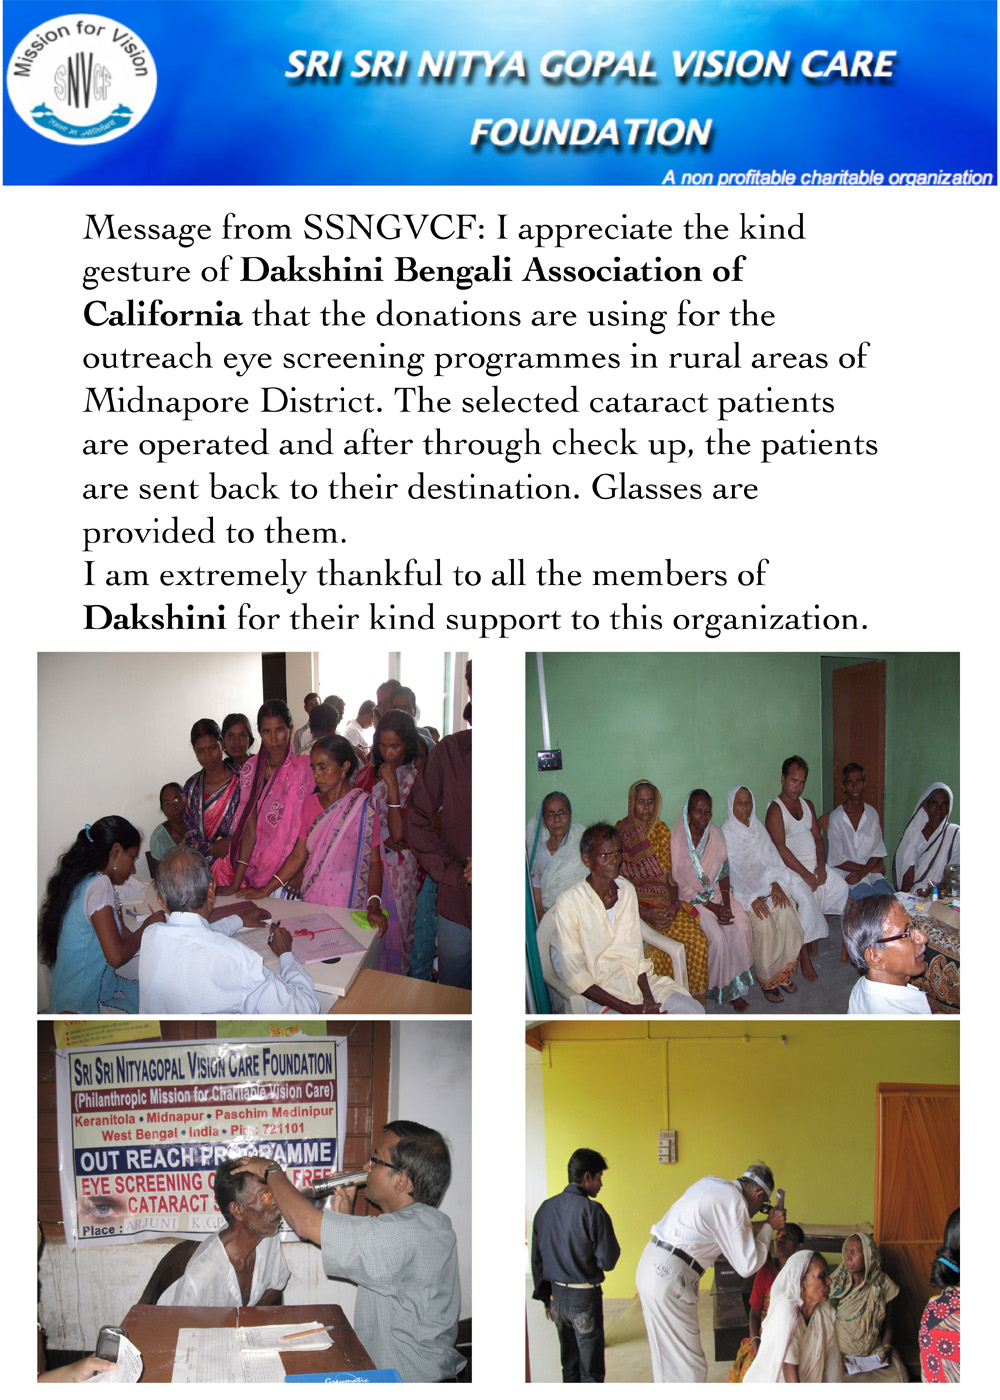 Sri Sri Nitya Gopal Vision Care Foundation